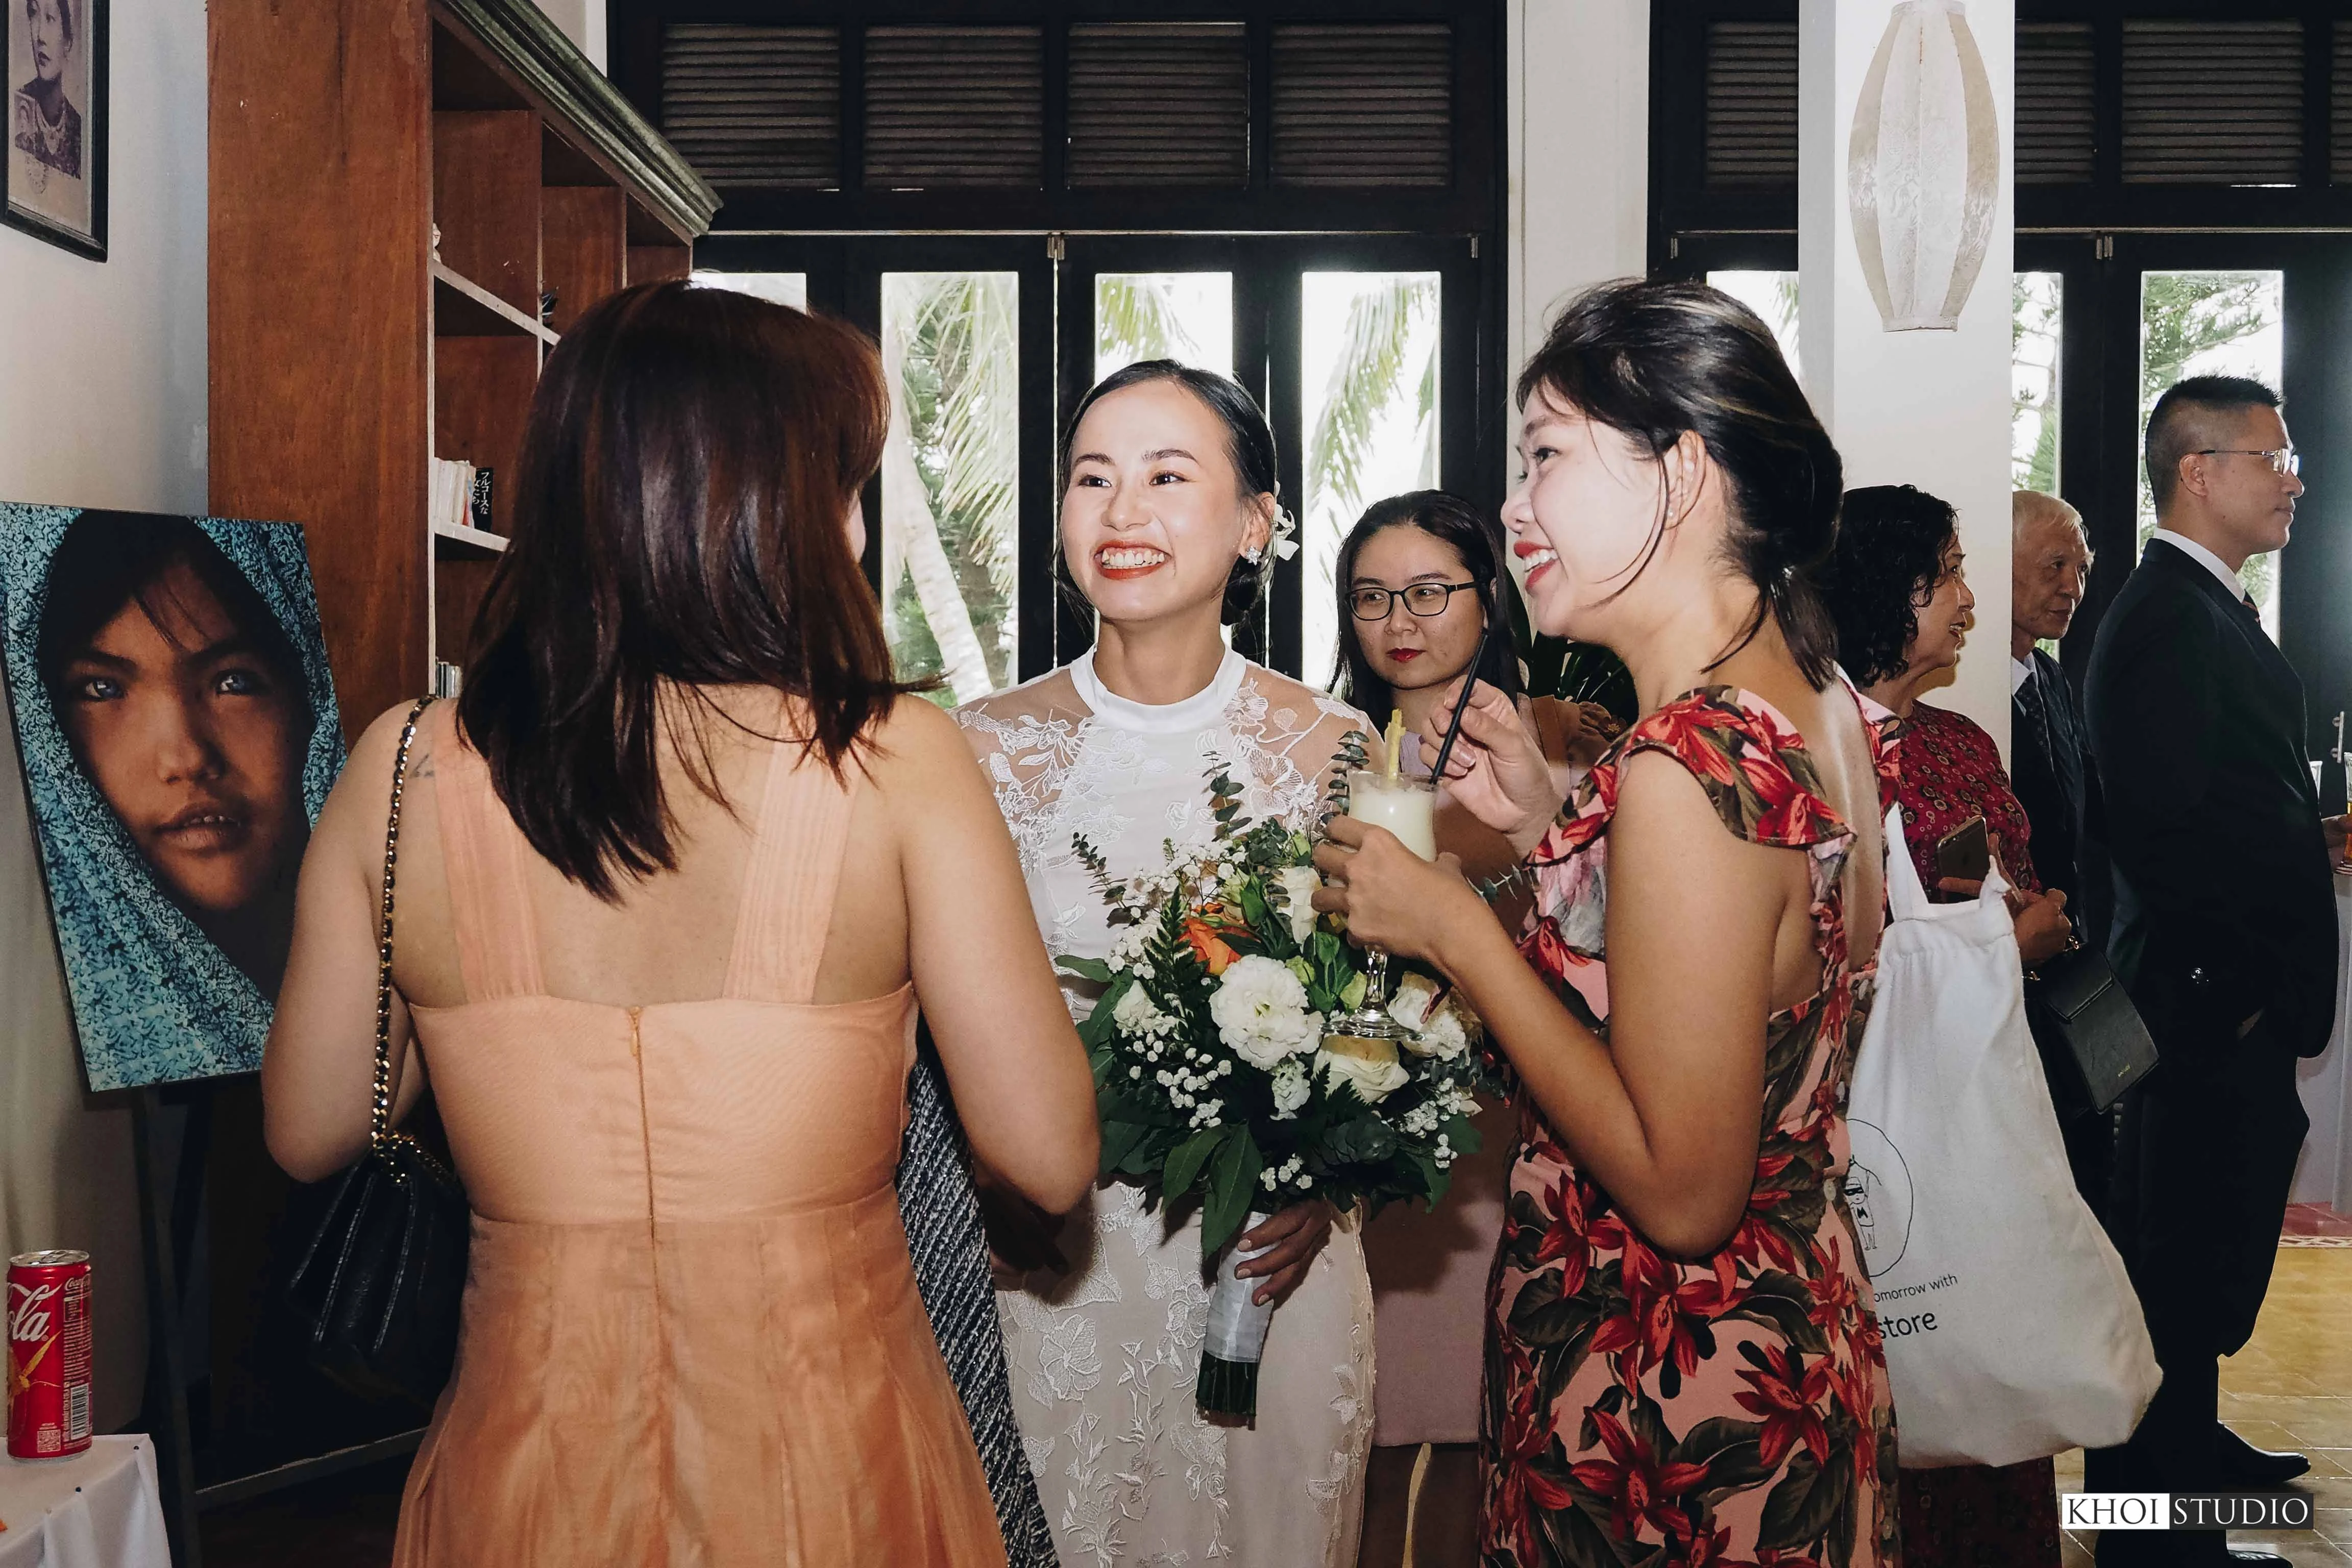 Khoi Studio: Wedding photography in Da Nang & Hoi An